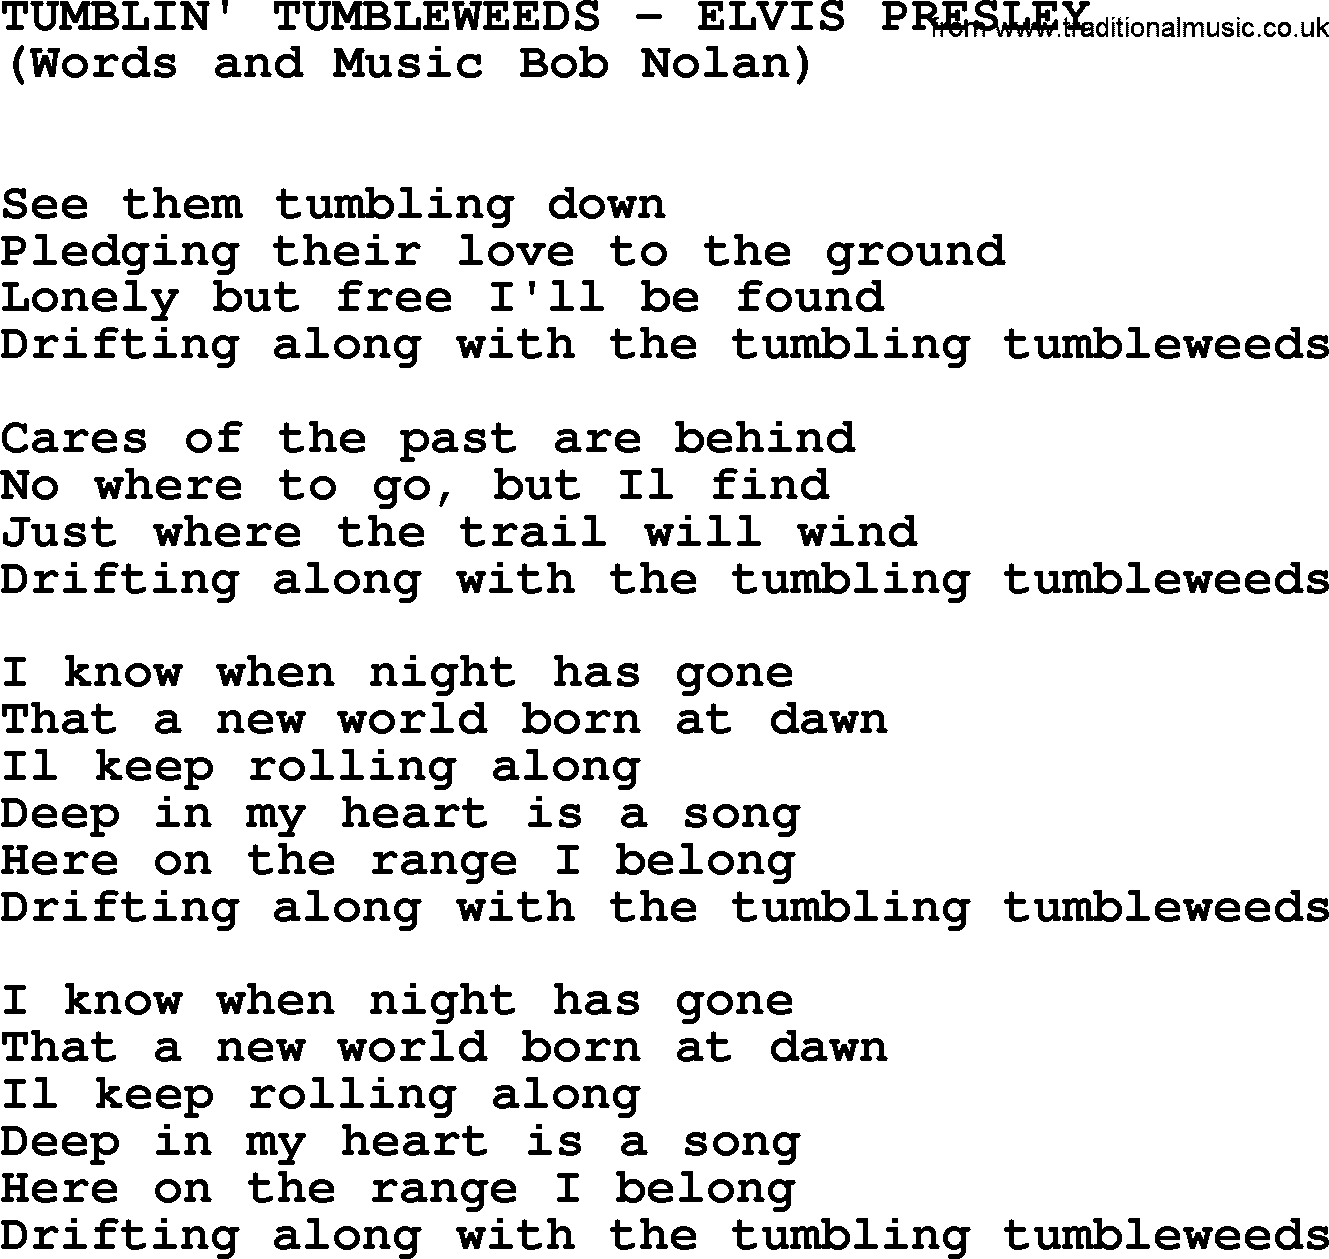 Elvis Presley song: Tumblin' Tumbleweeds lyrics